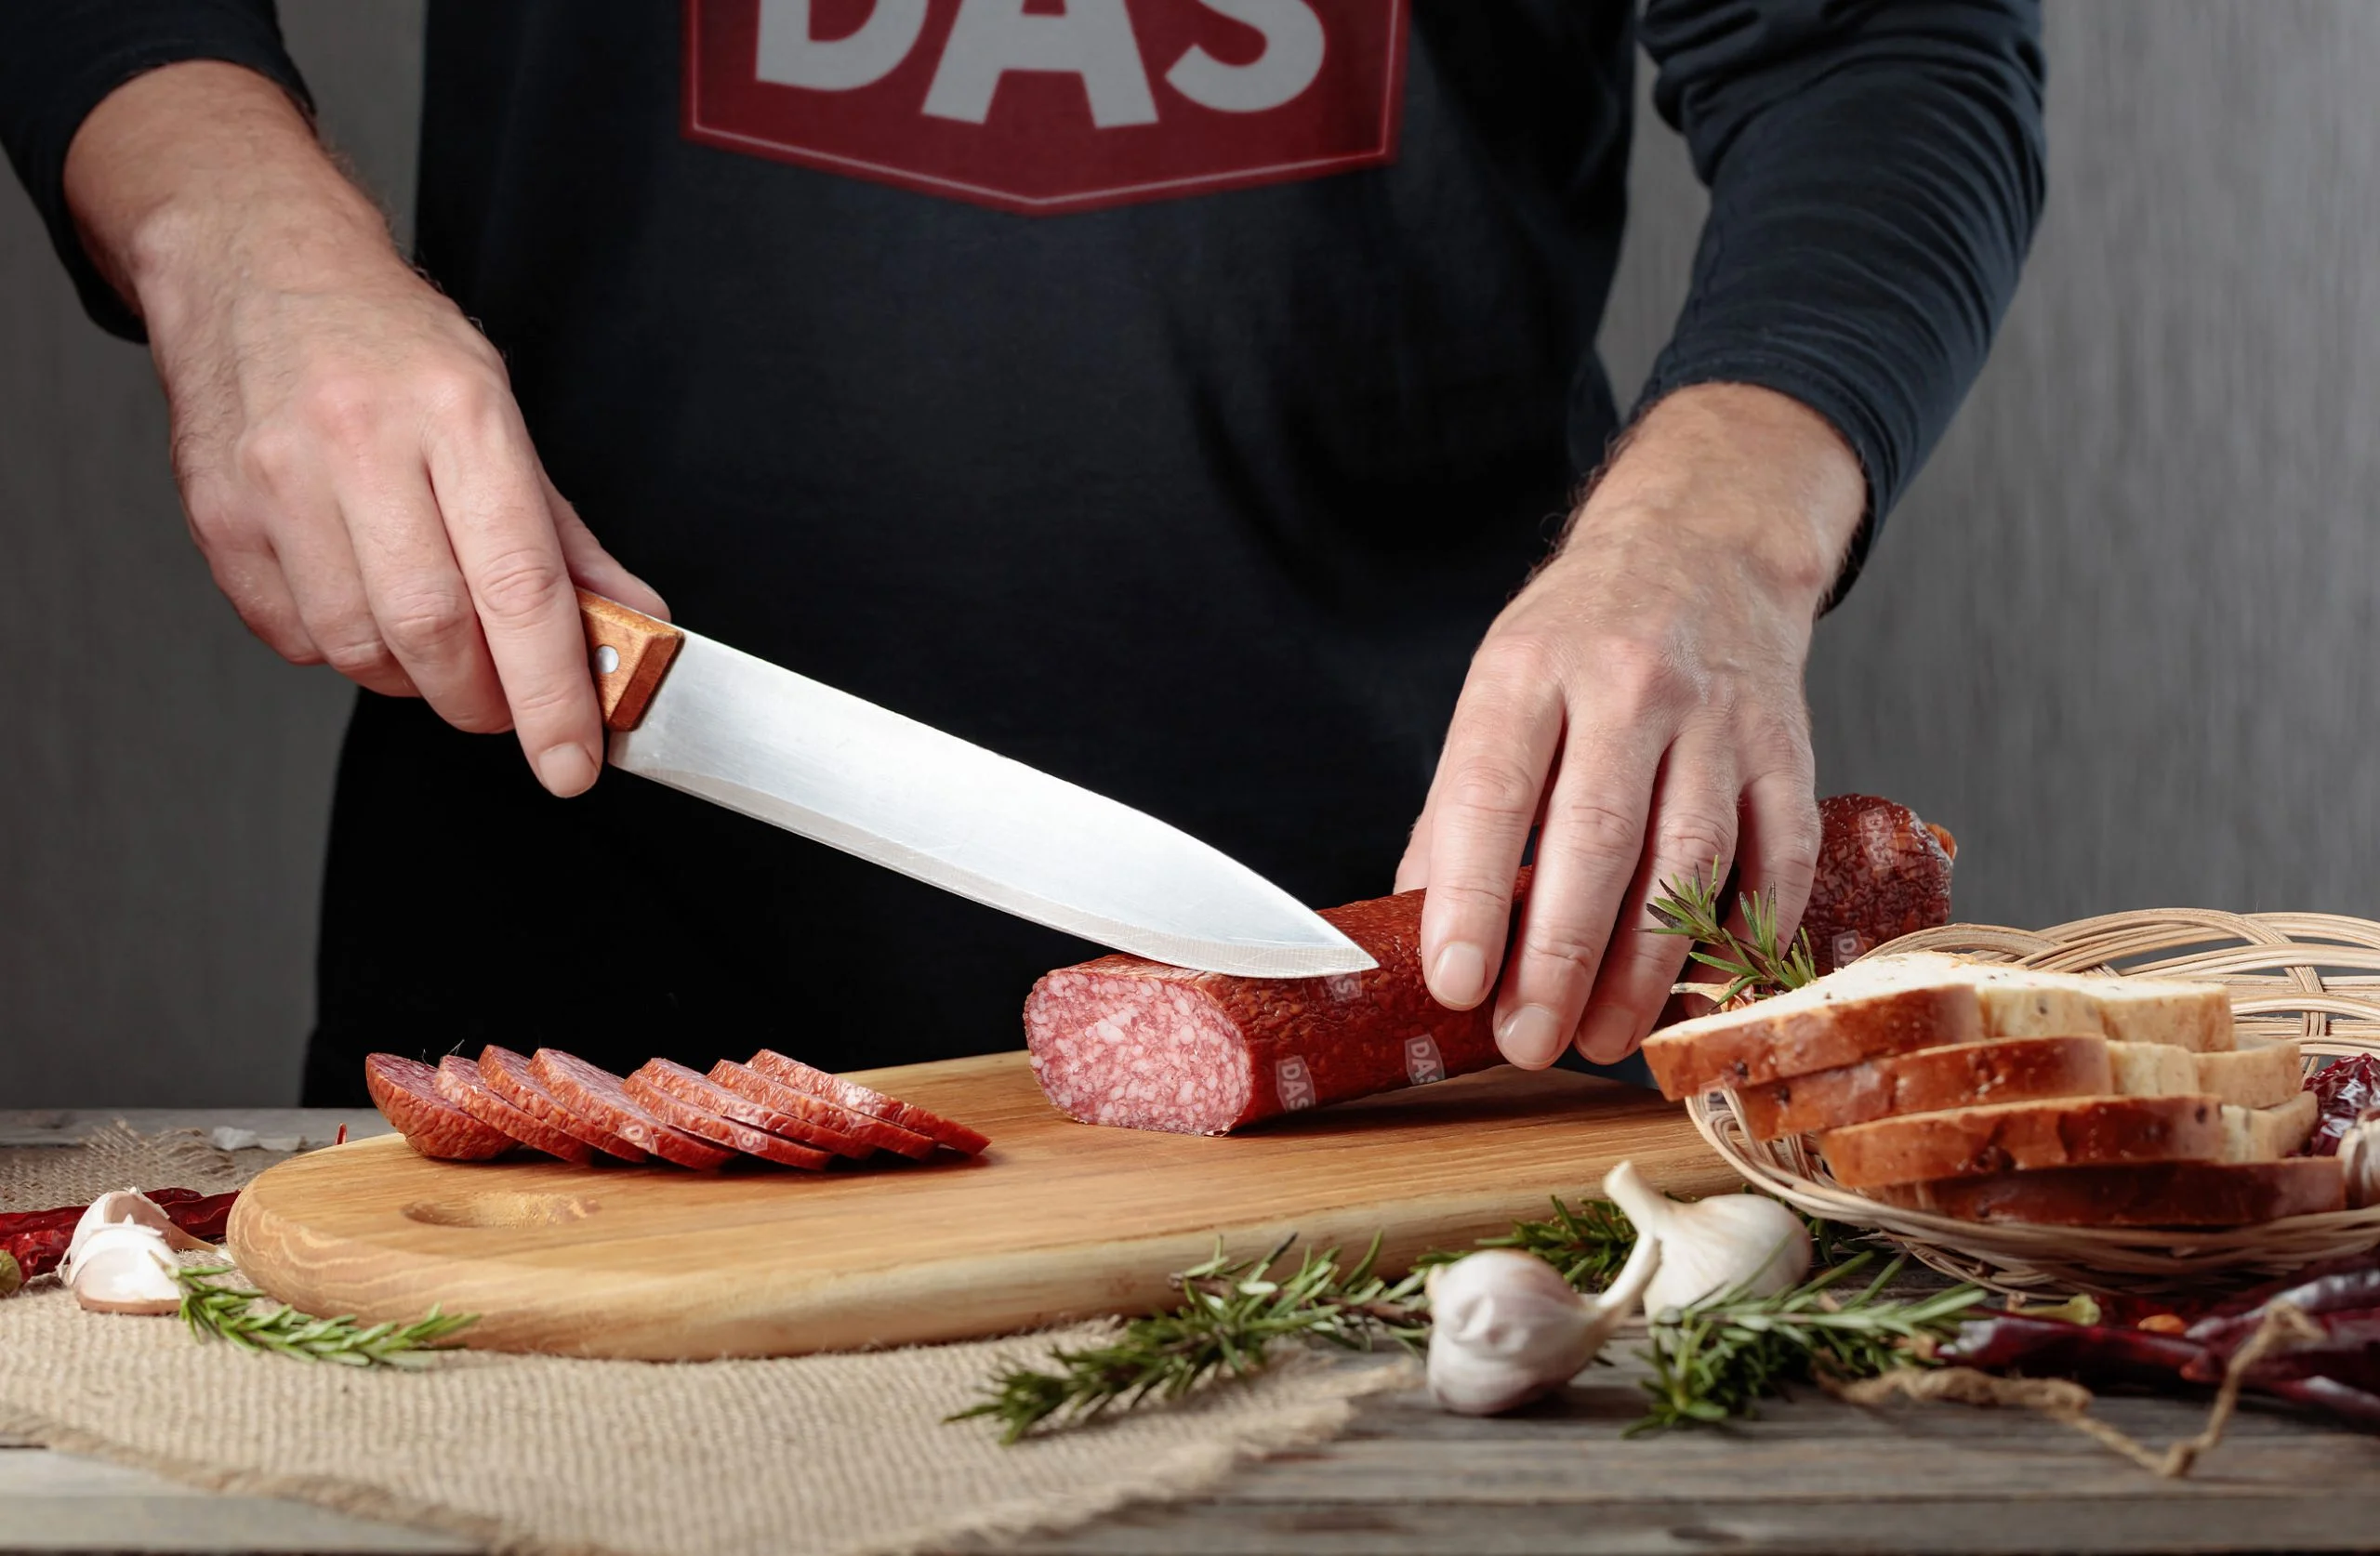 Реклама колбасы DAS